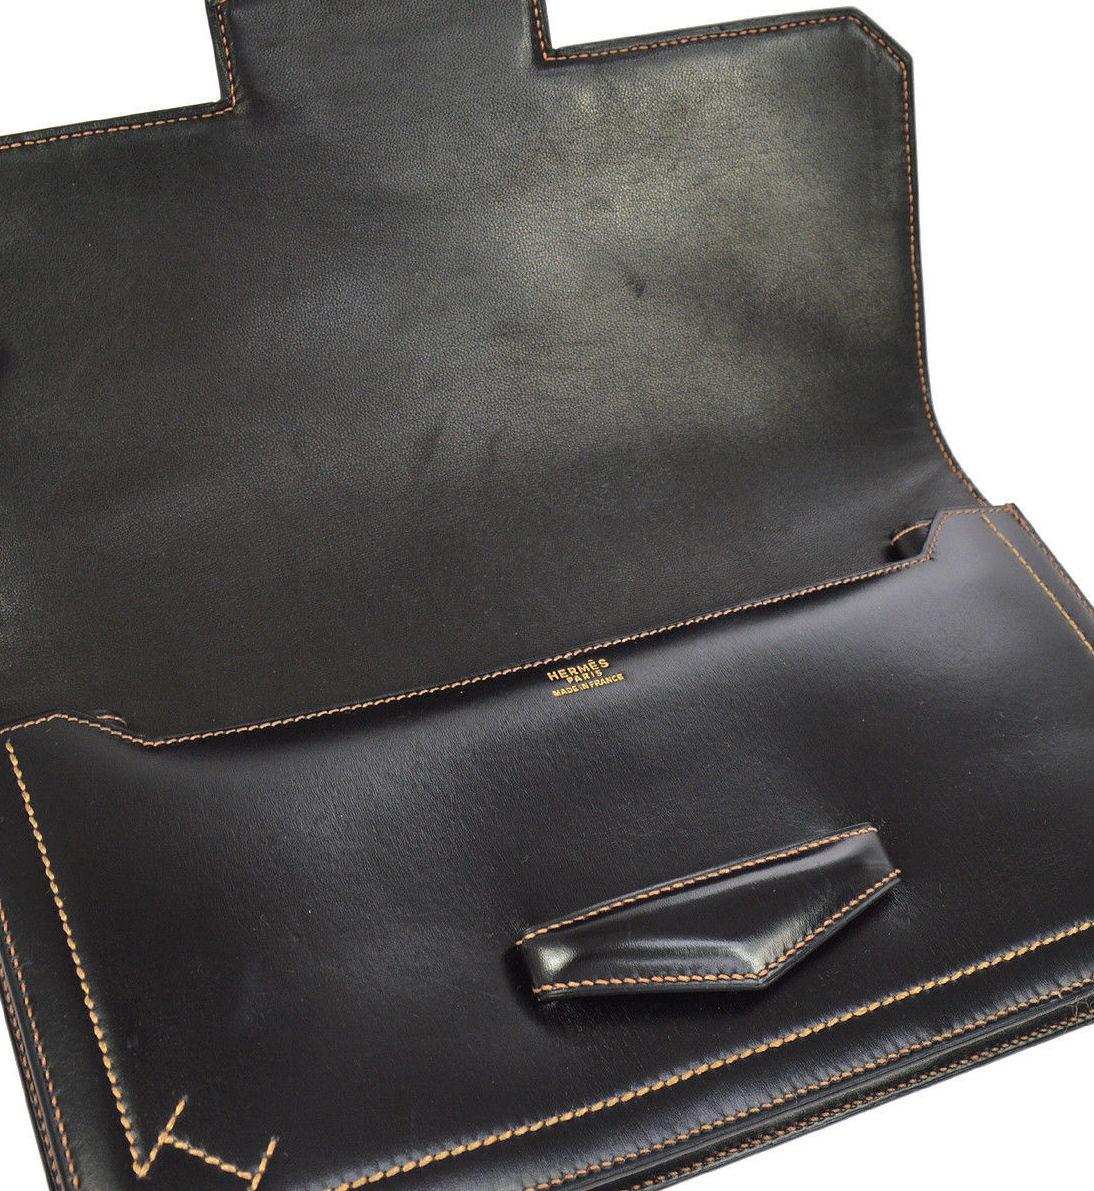 Hermes Leather Black Whipstitch Evening Envelope Fold in Flap Clutch Bag 2